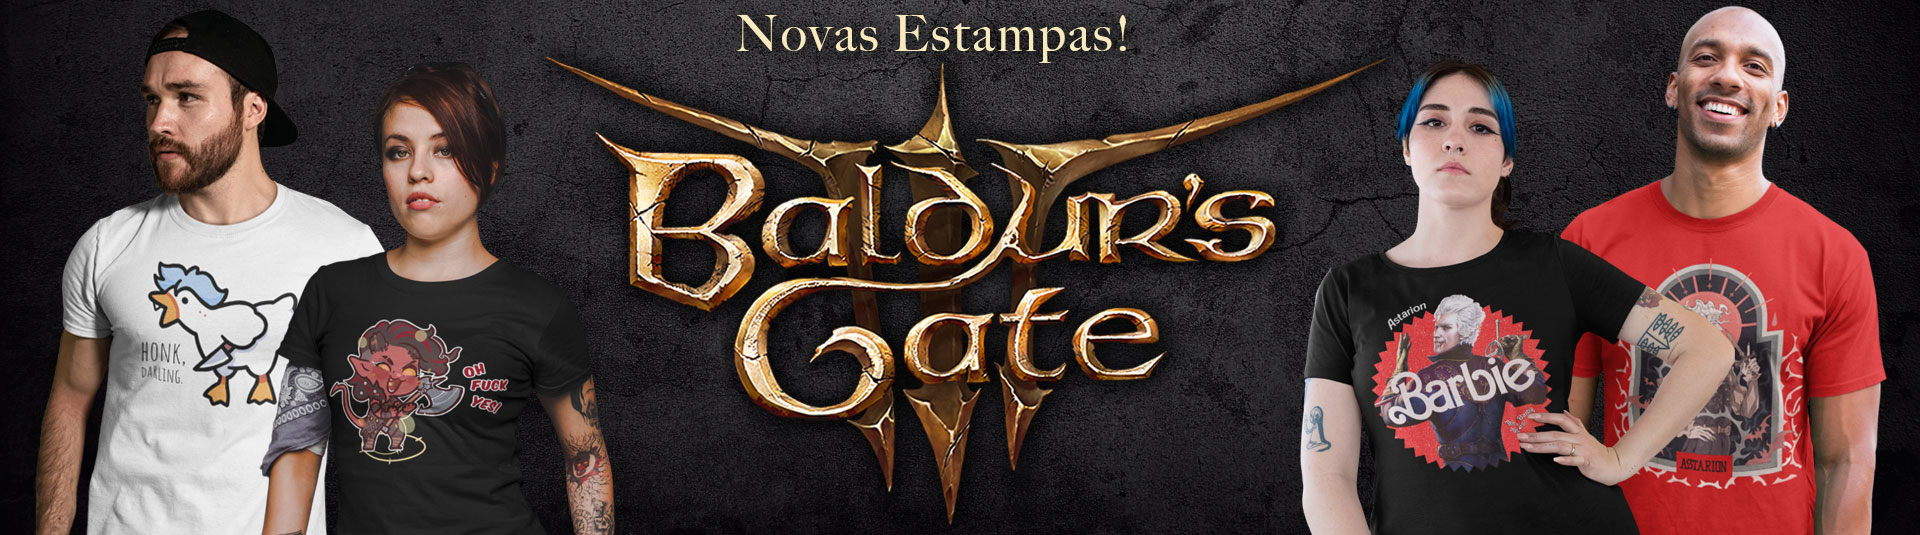 Baldur's Gate III NOVAS